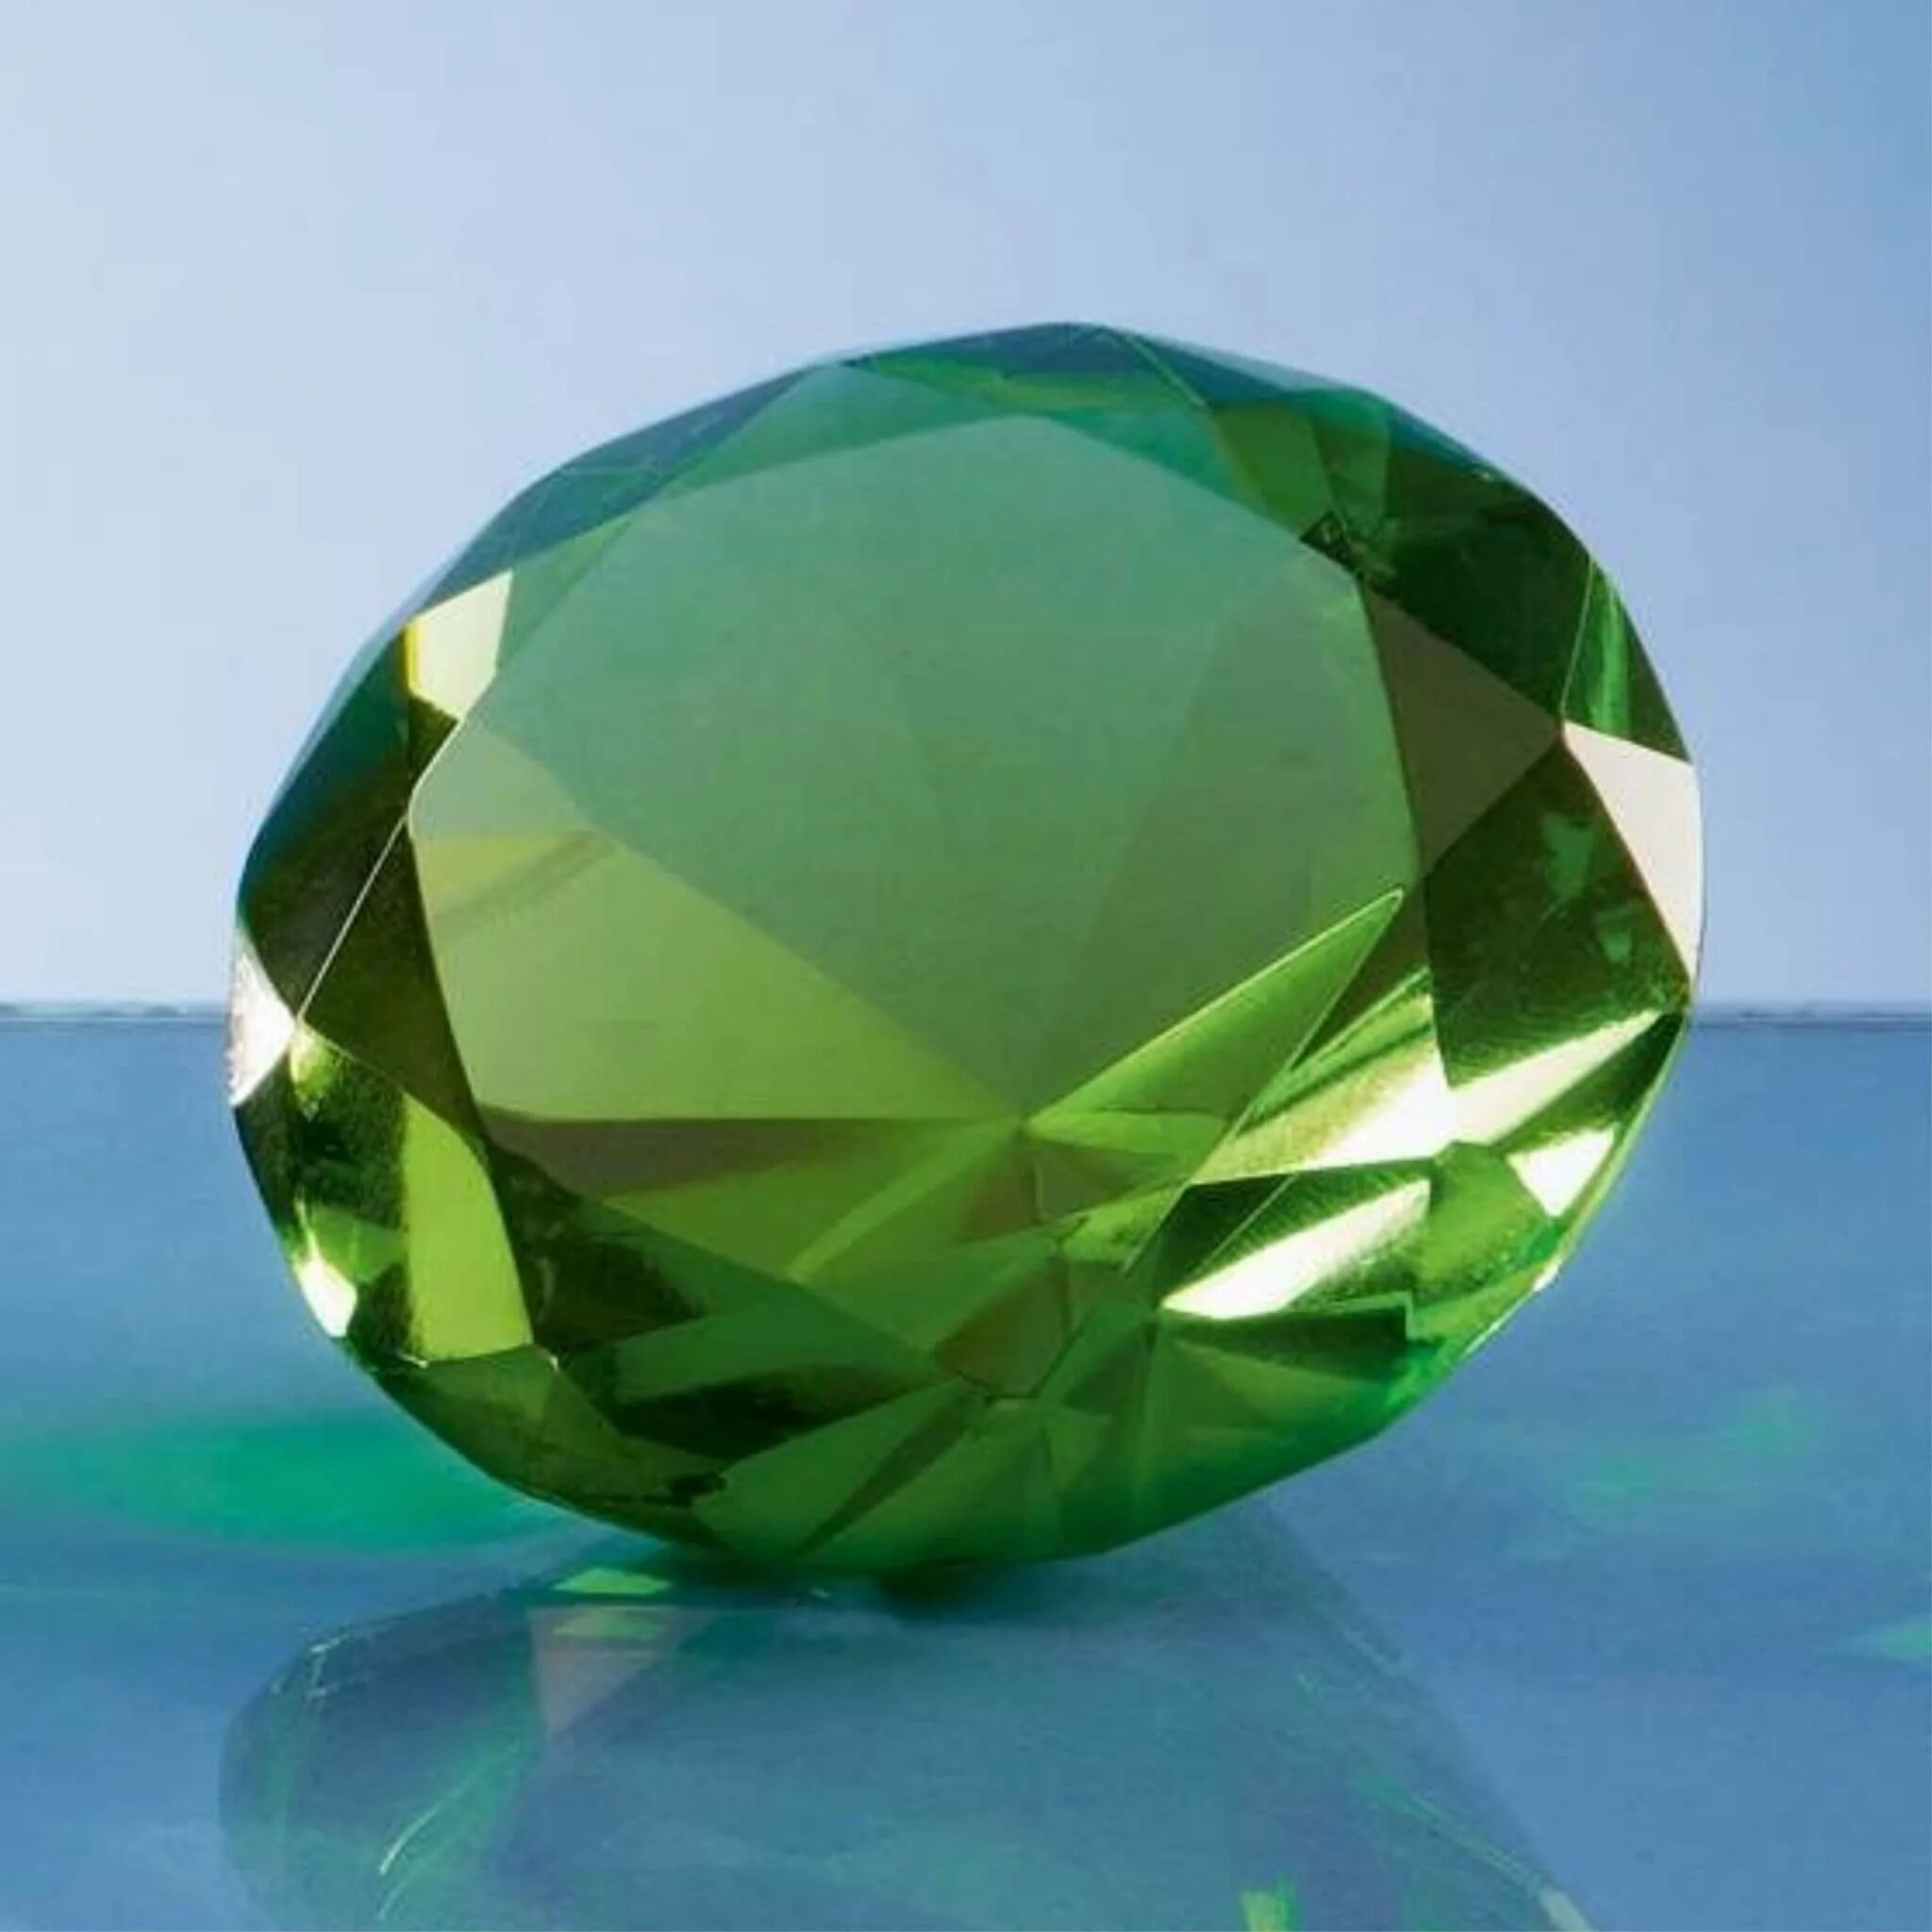 Даймонд Грин. Зеленый Кристалл Кристалл. Зелёный Алмаз камень. Кристаллический зеленый